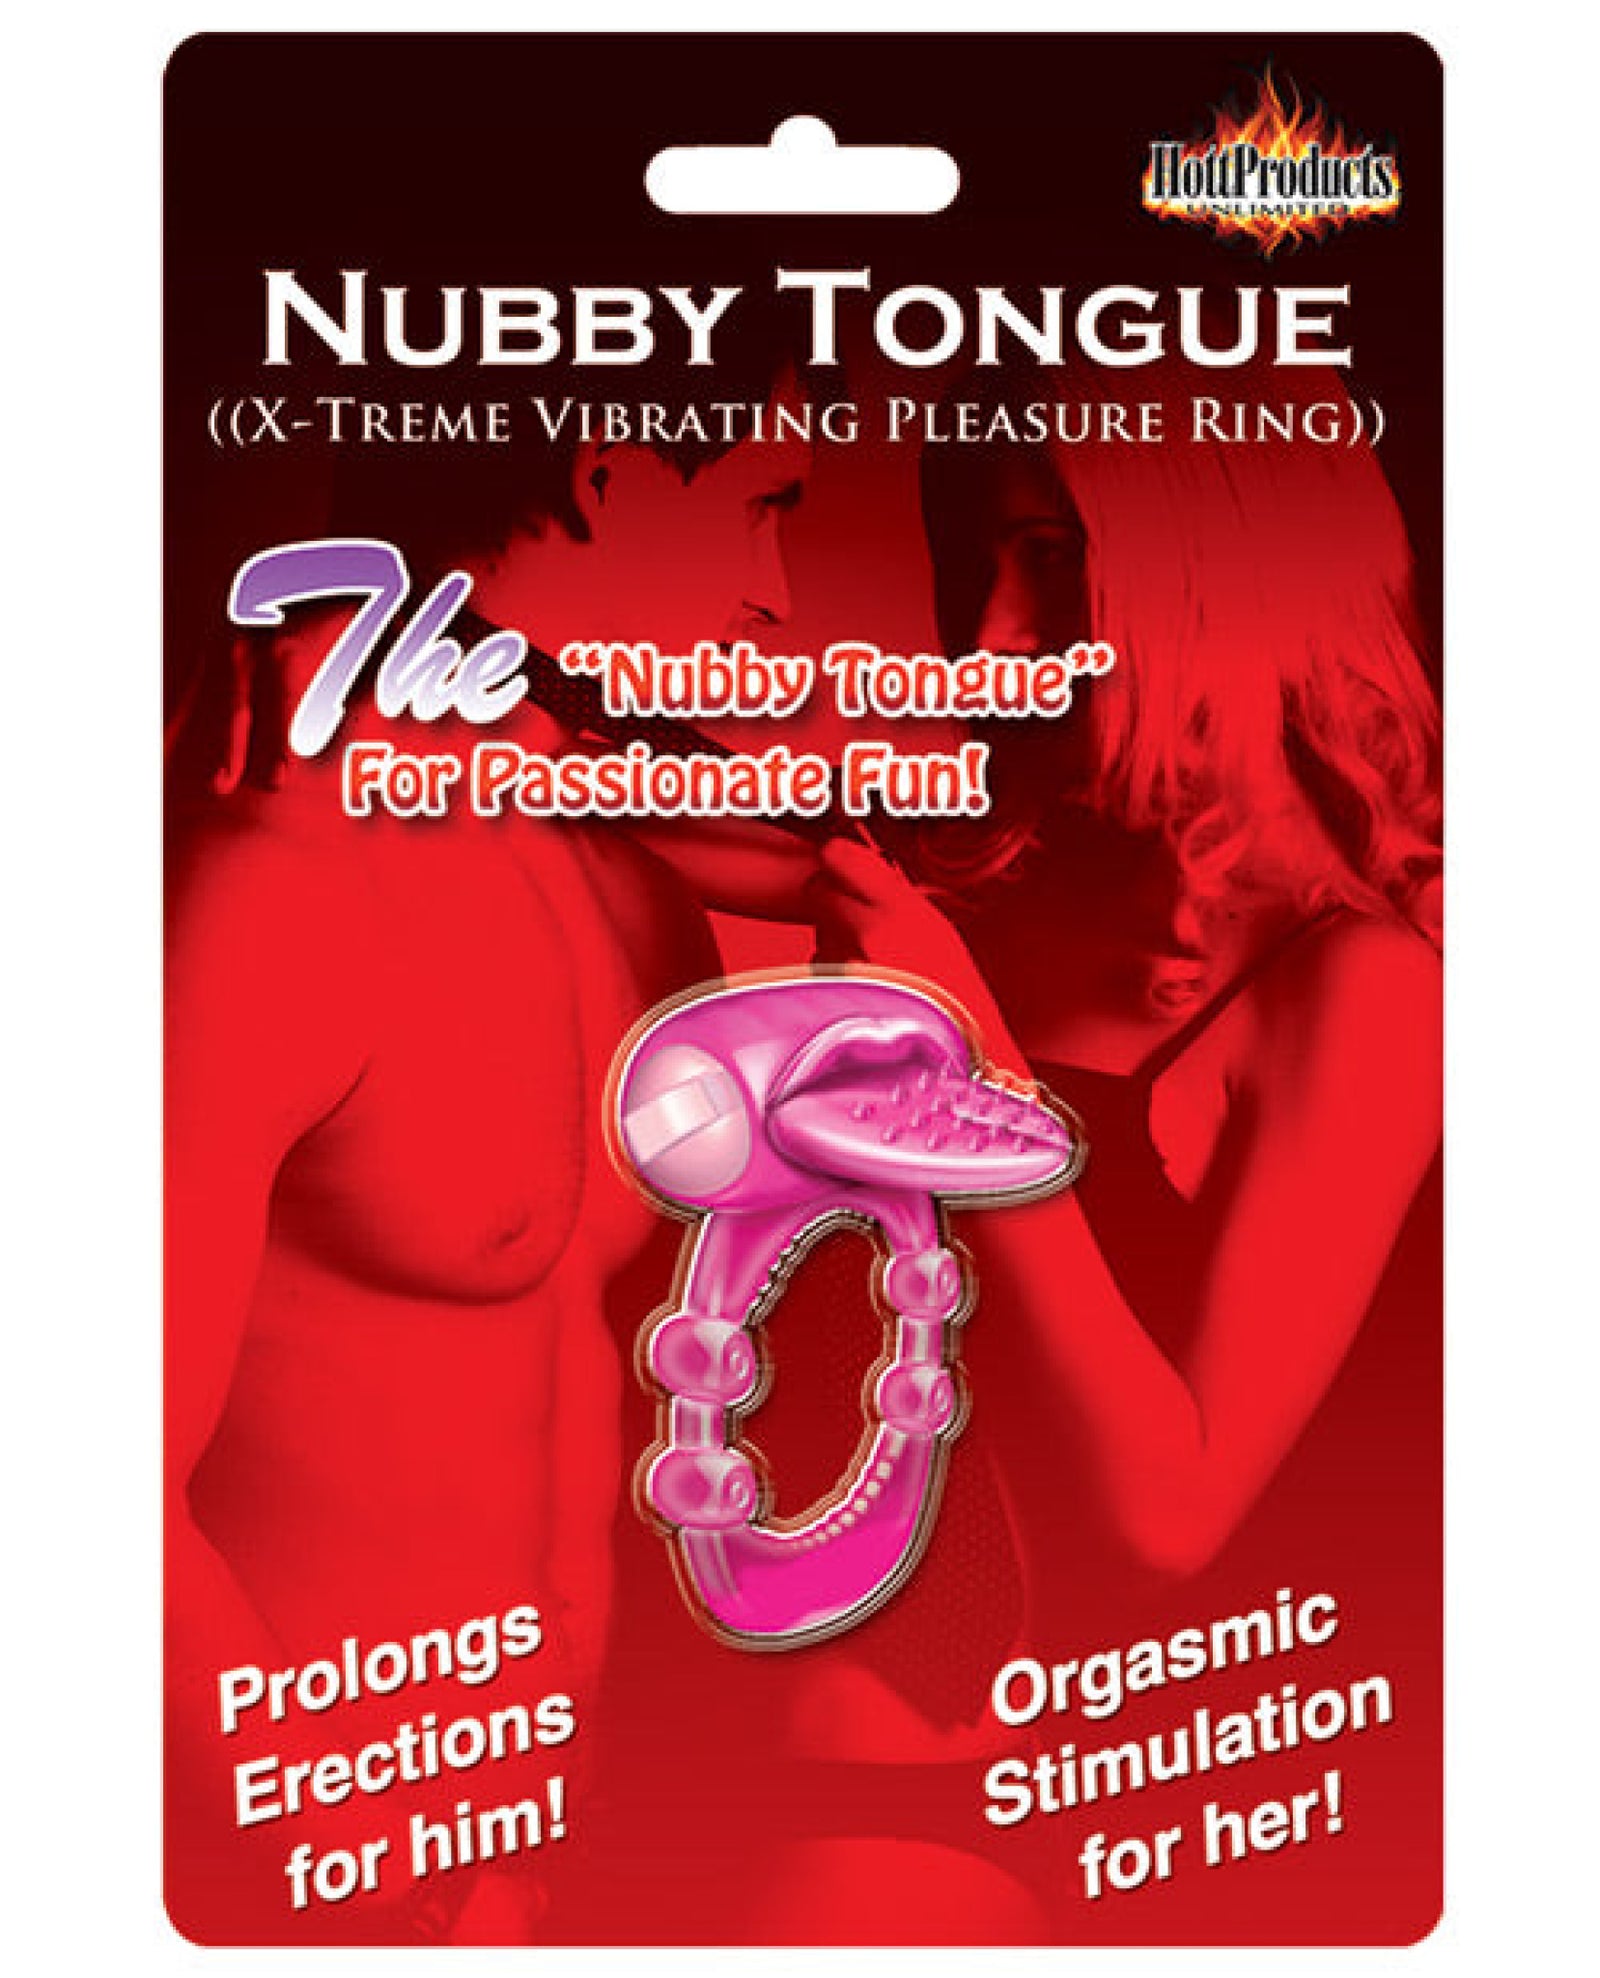 Nubby Tongue X-treme Vibrating Pleasure Ring Hott Products